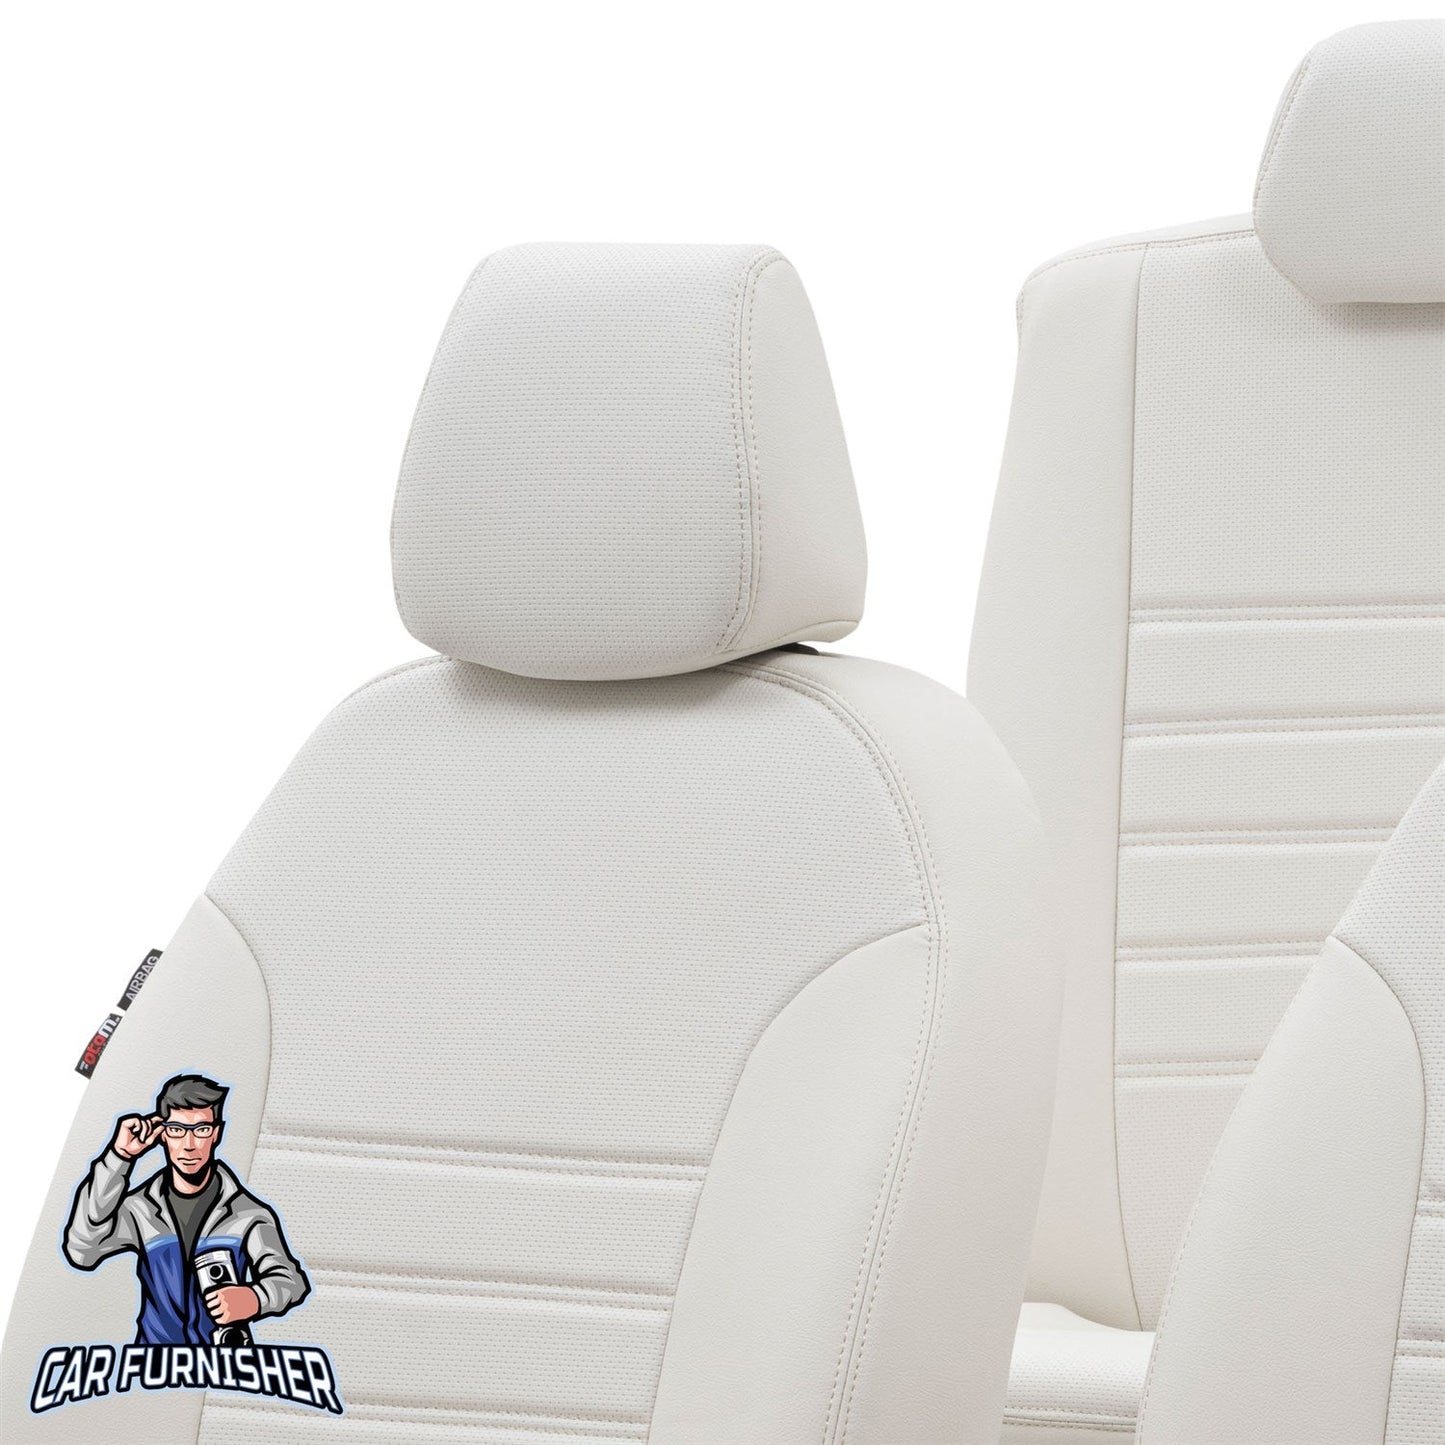 Suzuki S-Cross Car Seat Covers 2013-2018 New York Design Ivory Leather